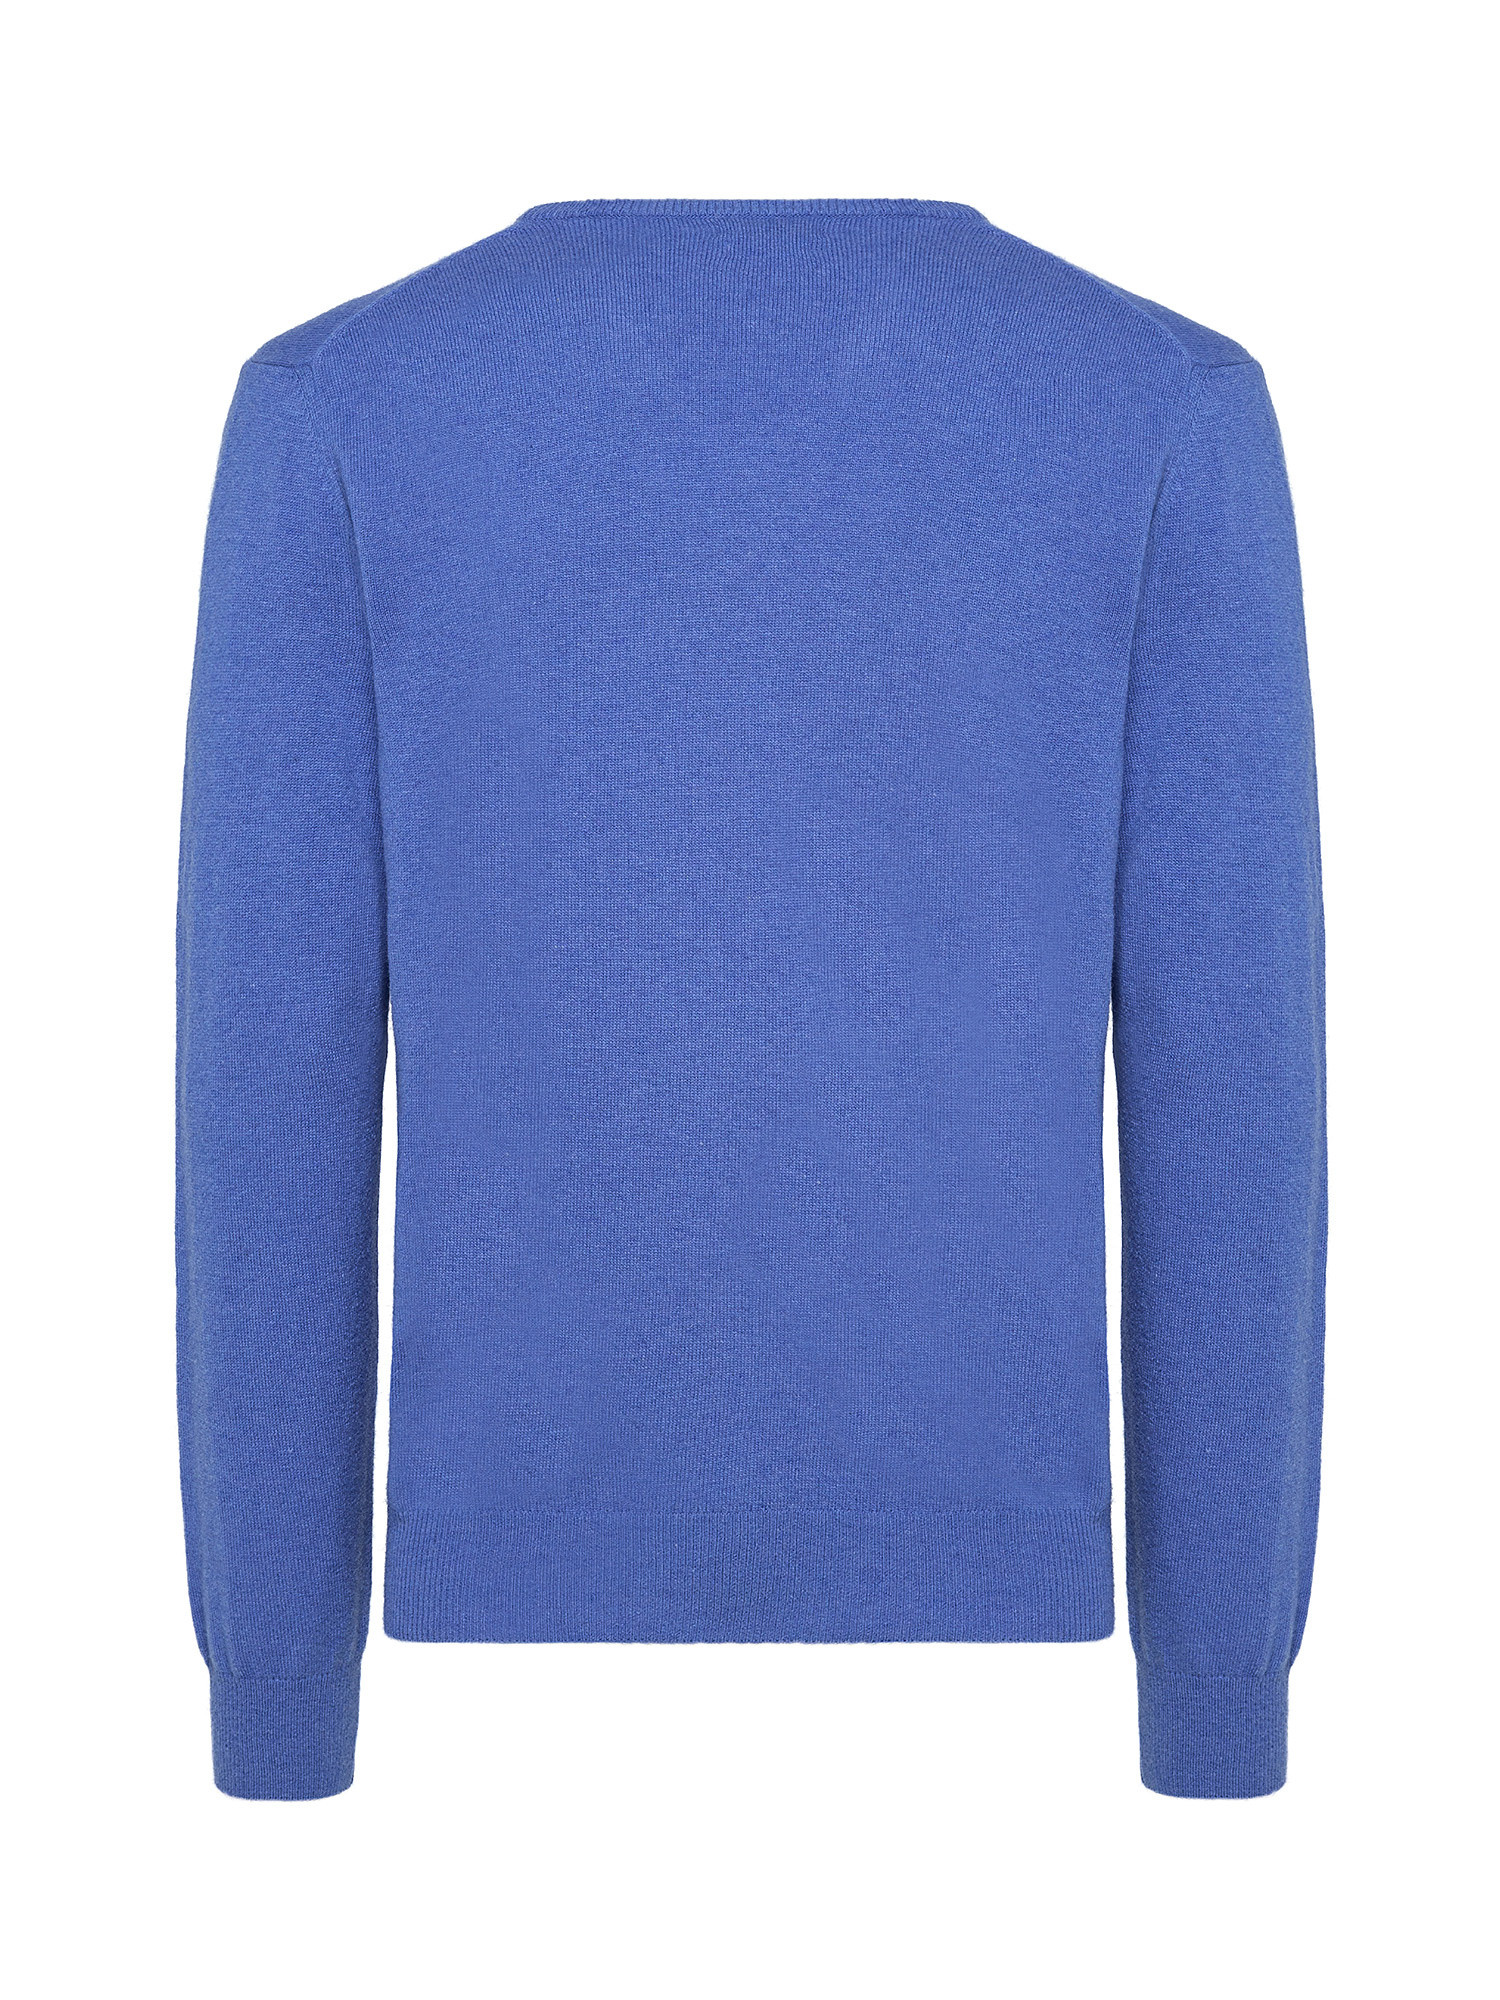 Cashmere Blend V-neck sweater with noble fibers, Aviation Blue, large image number 1